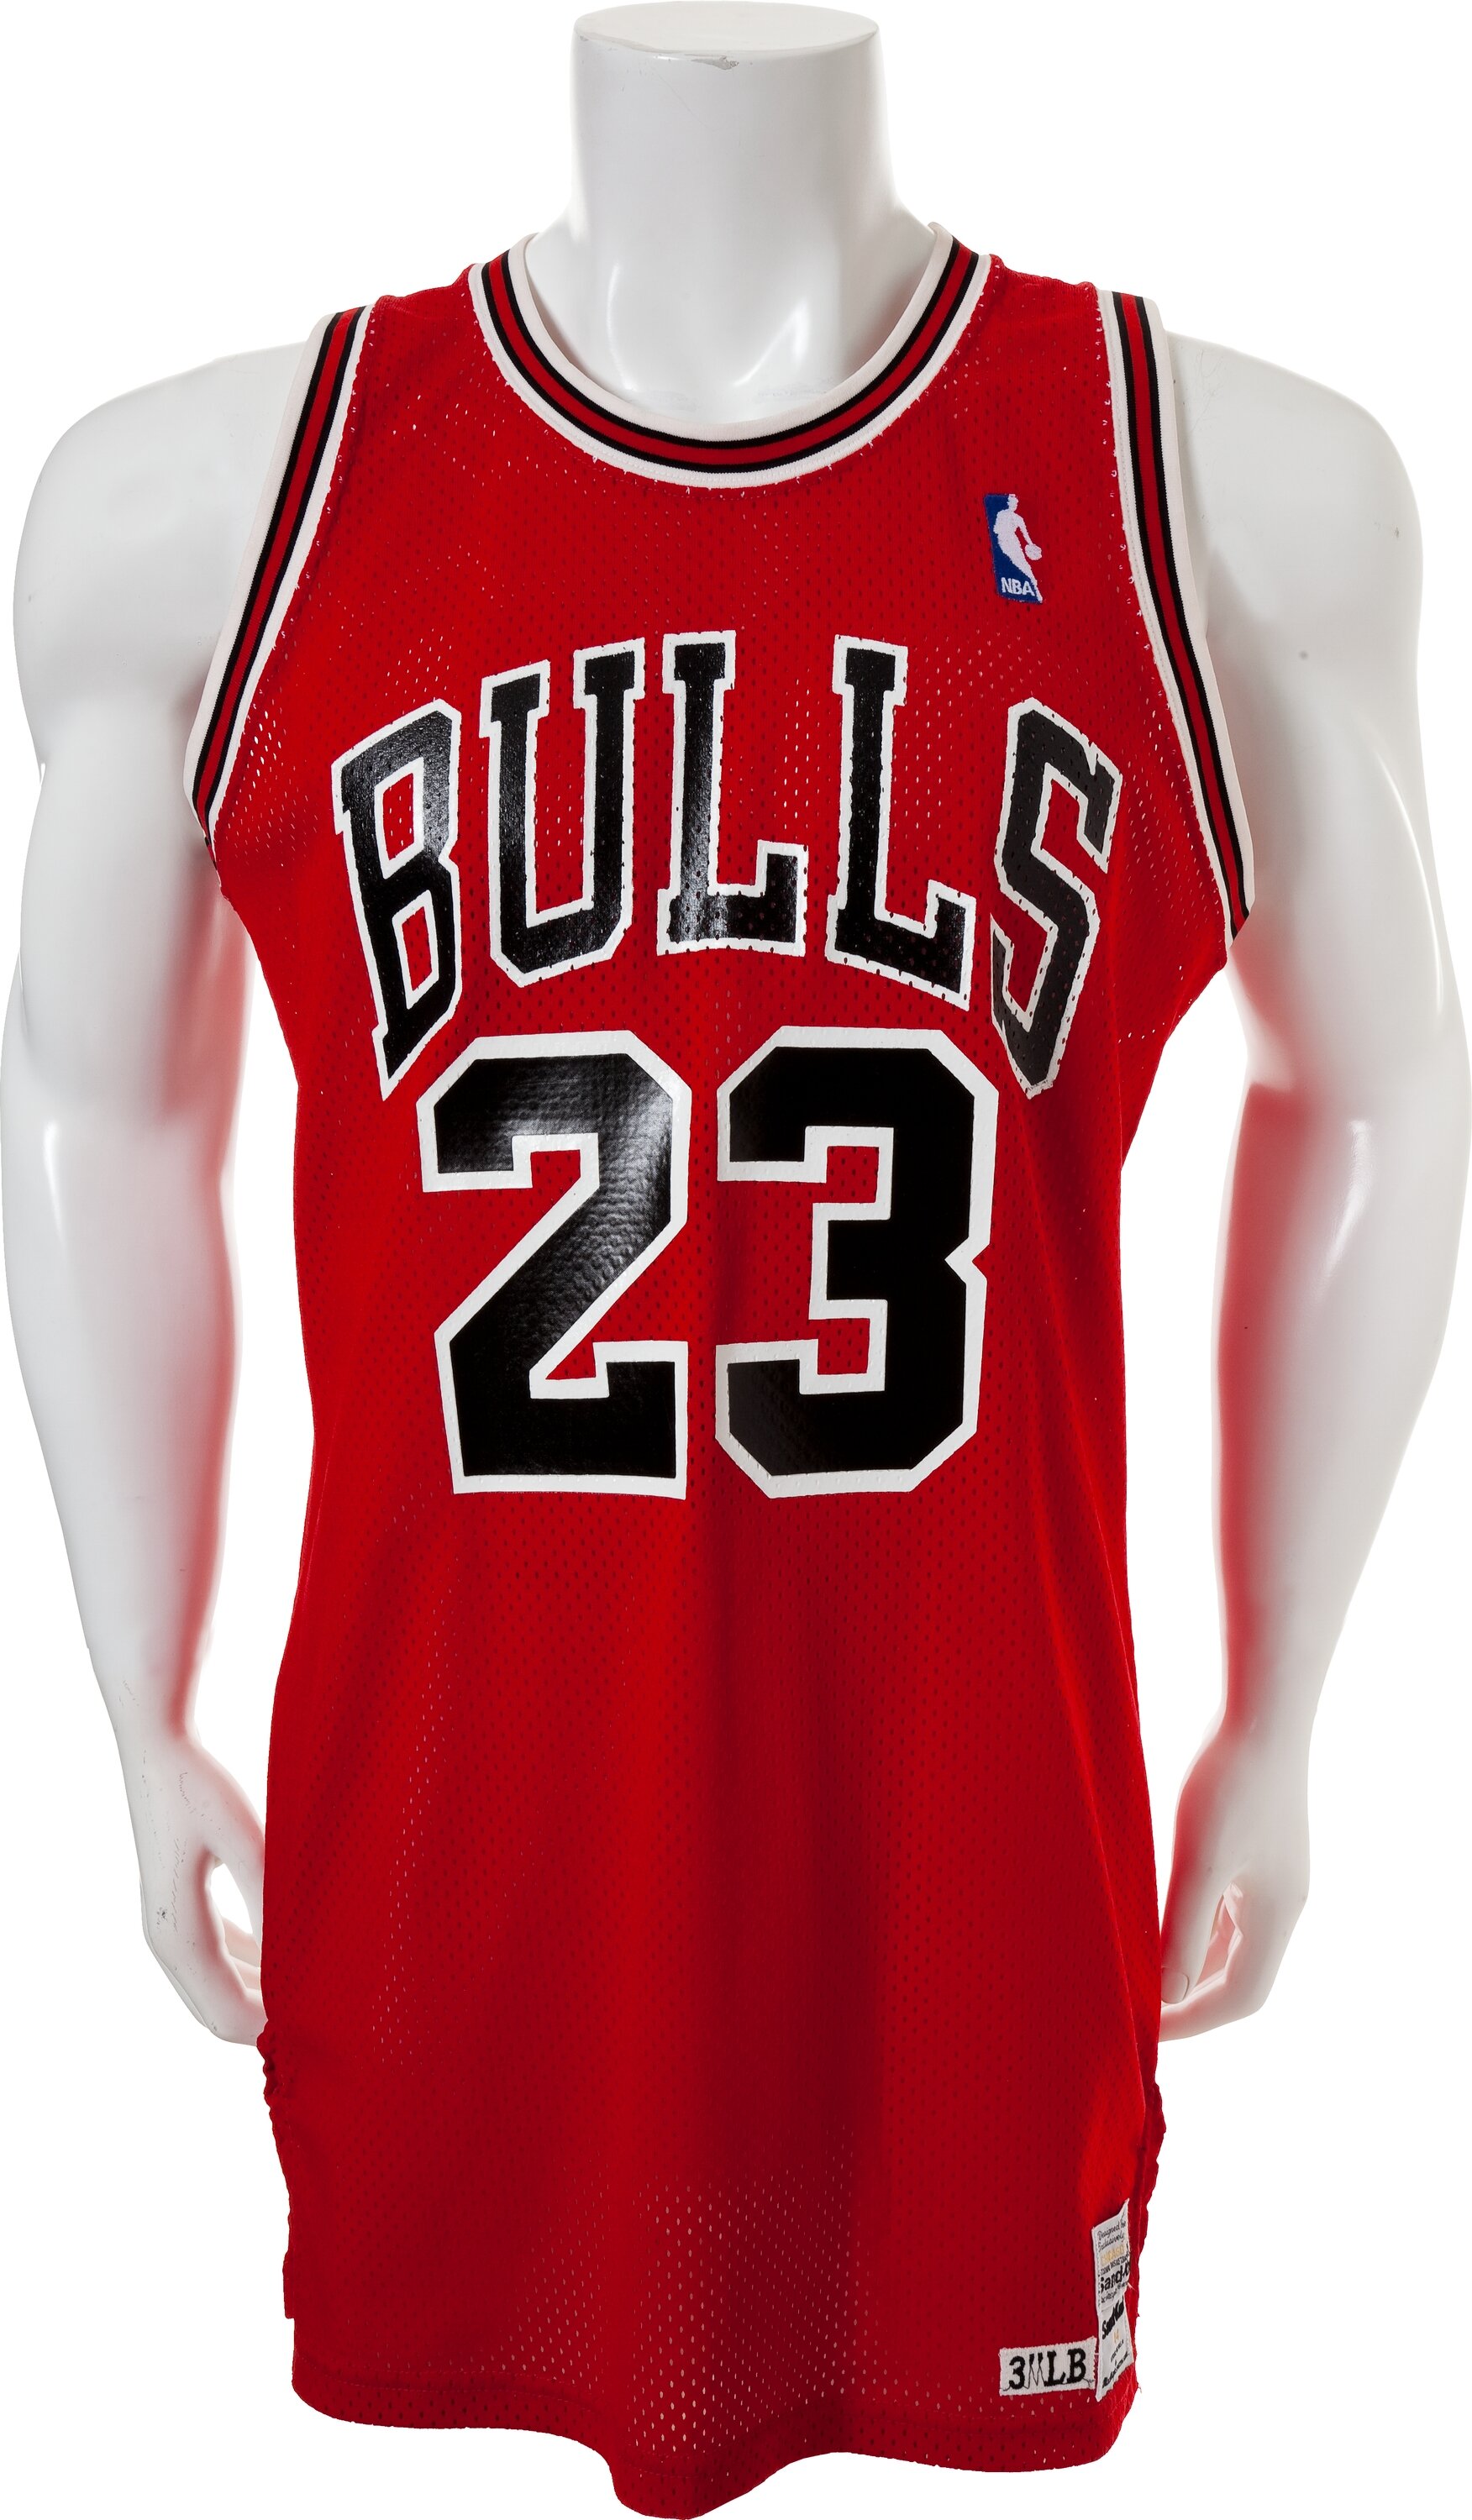 Chicago Bulls Basketball Jersey, worn by Michael Jordan